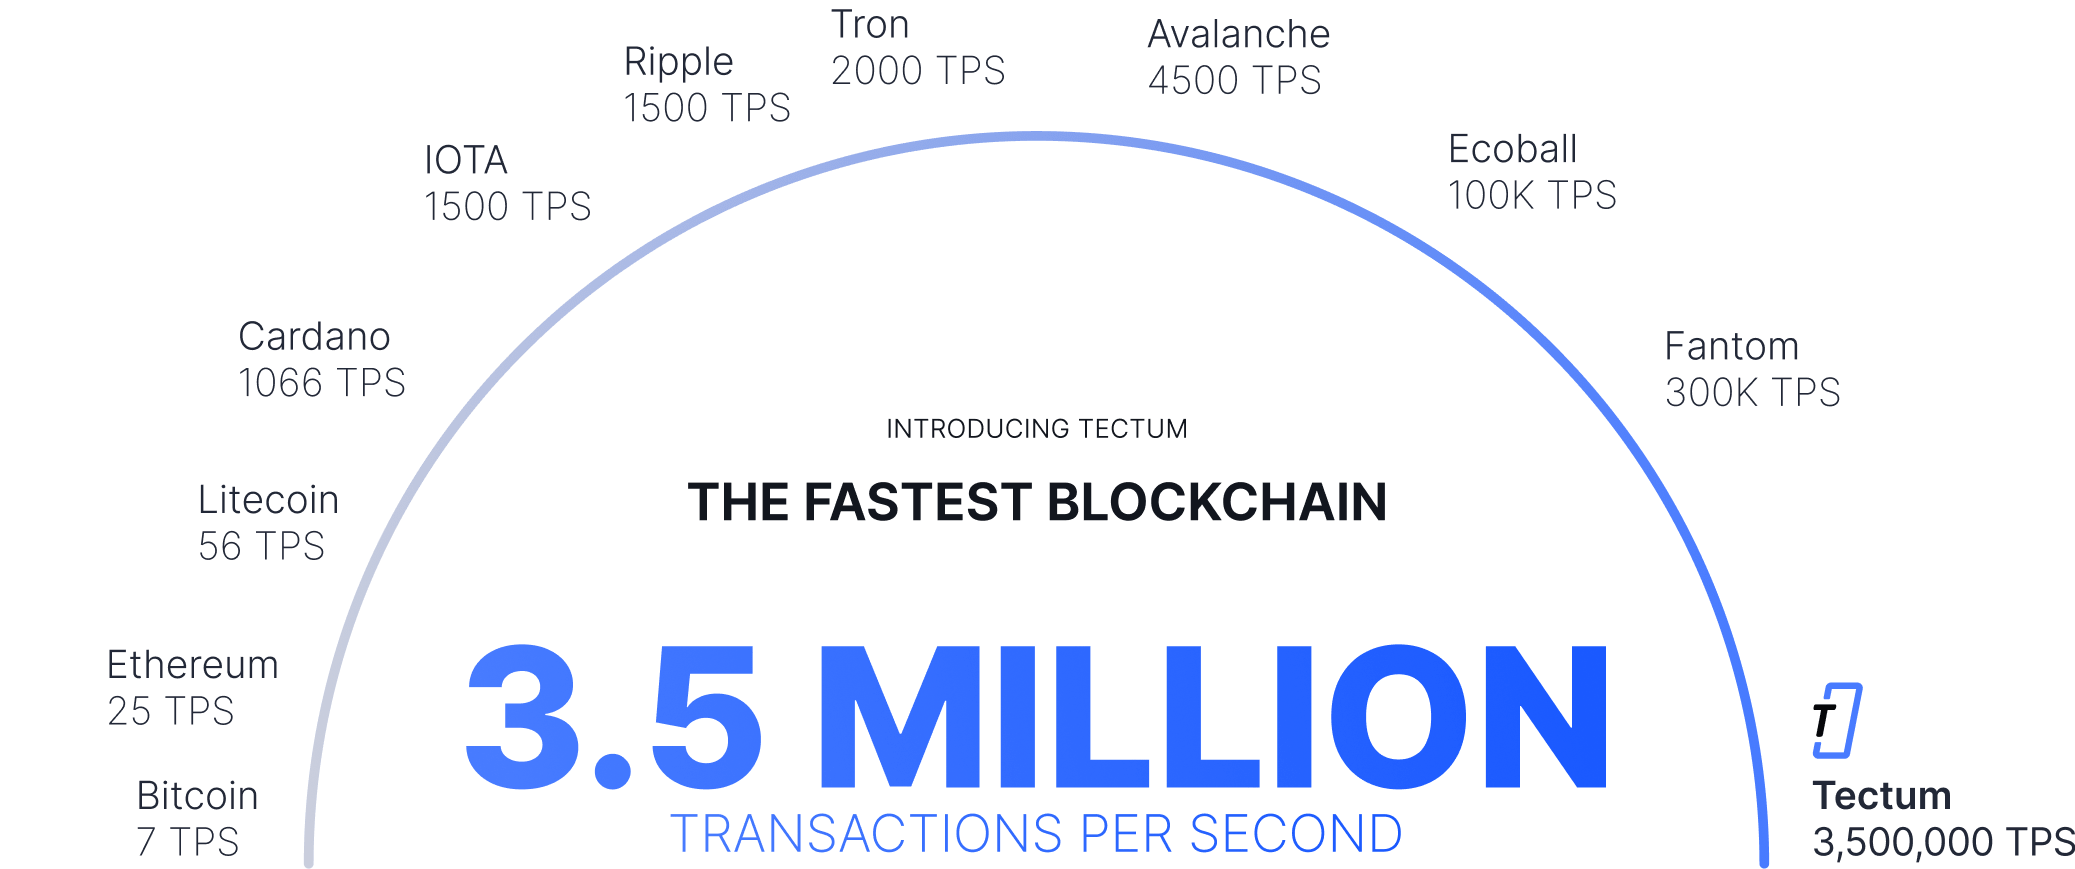 The Fastest Blockchain